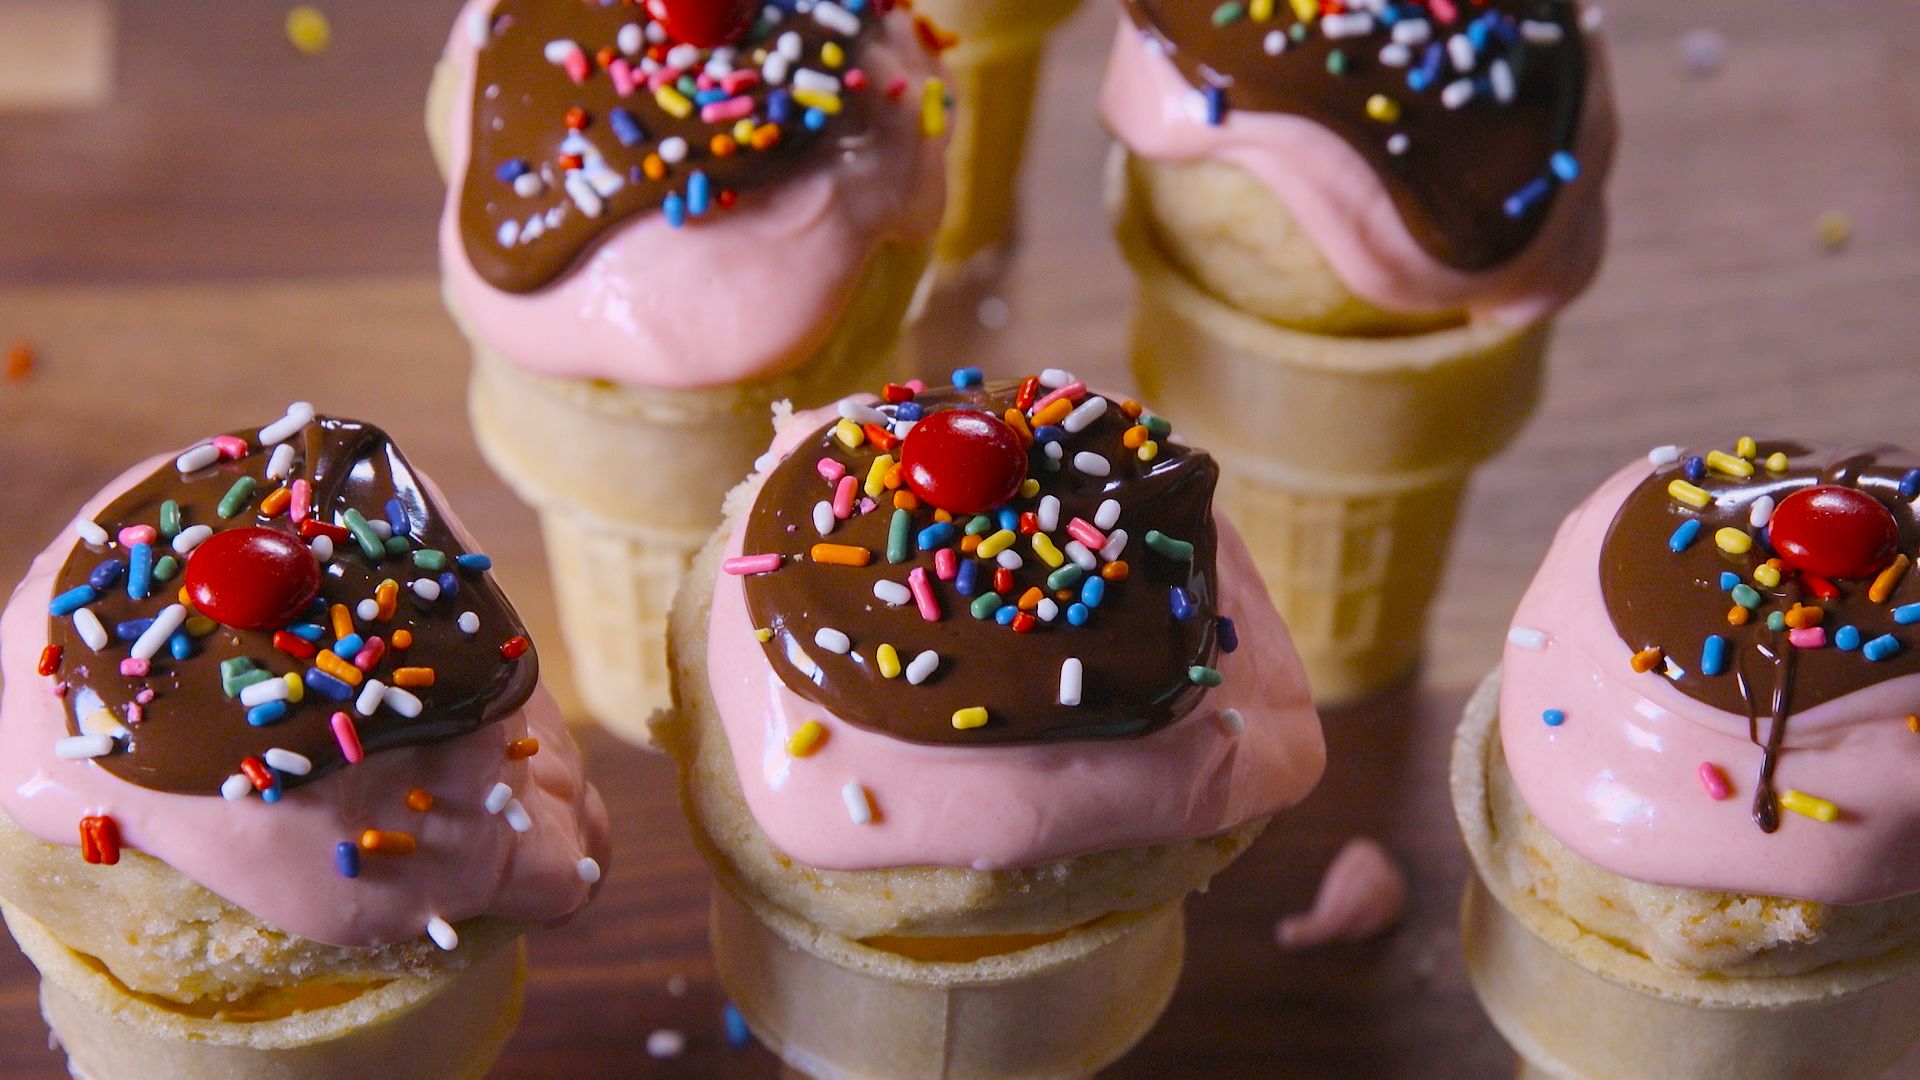 Delicious Ice Cream Scoop Cake Pops